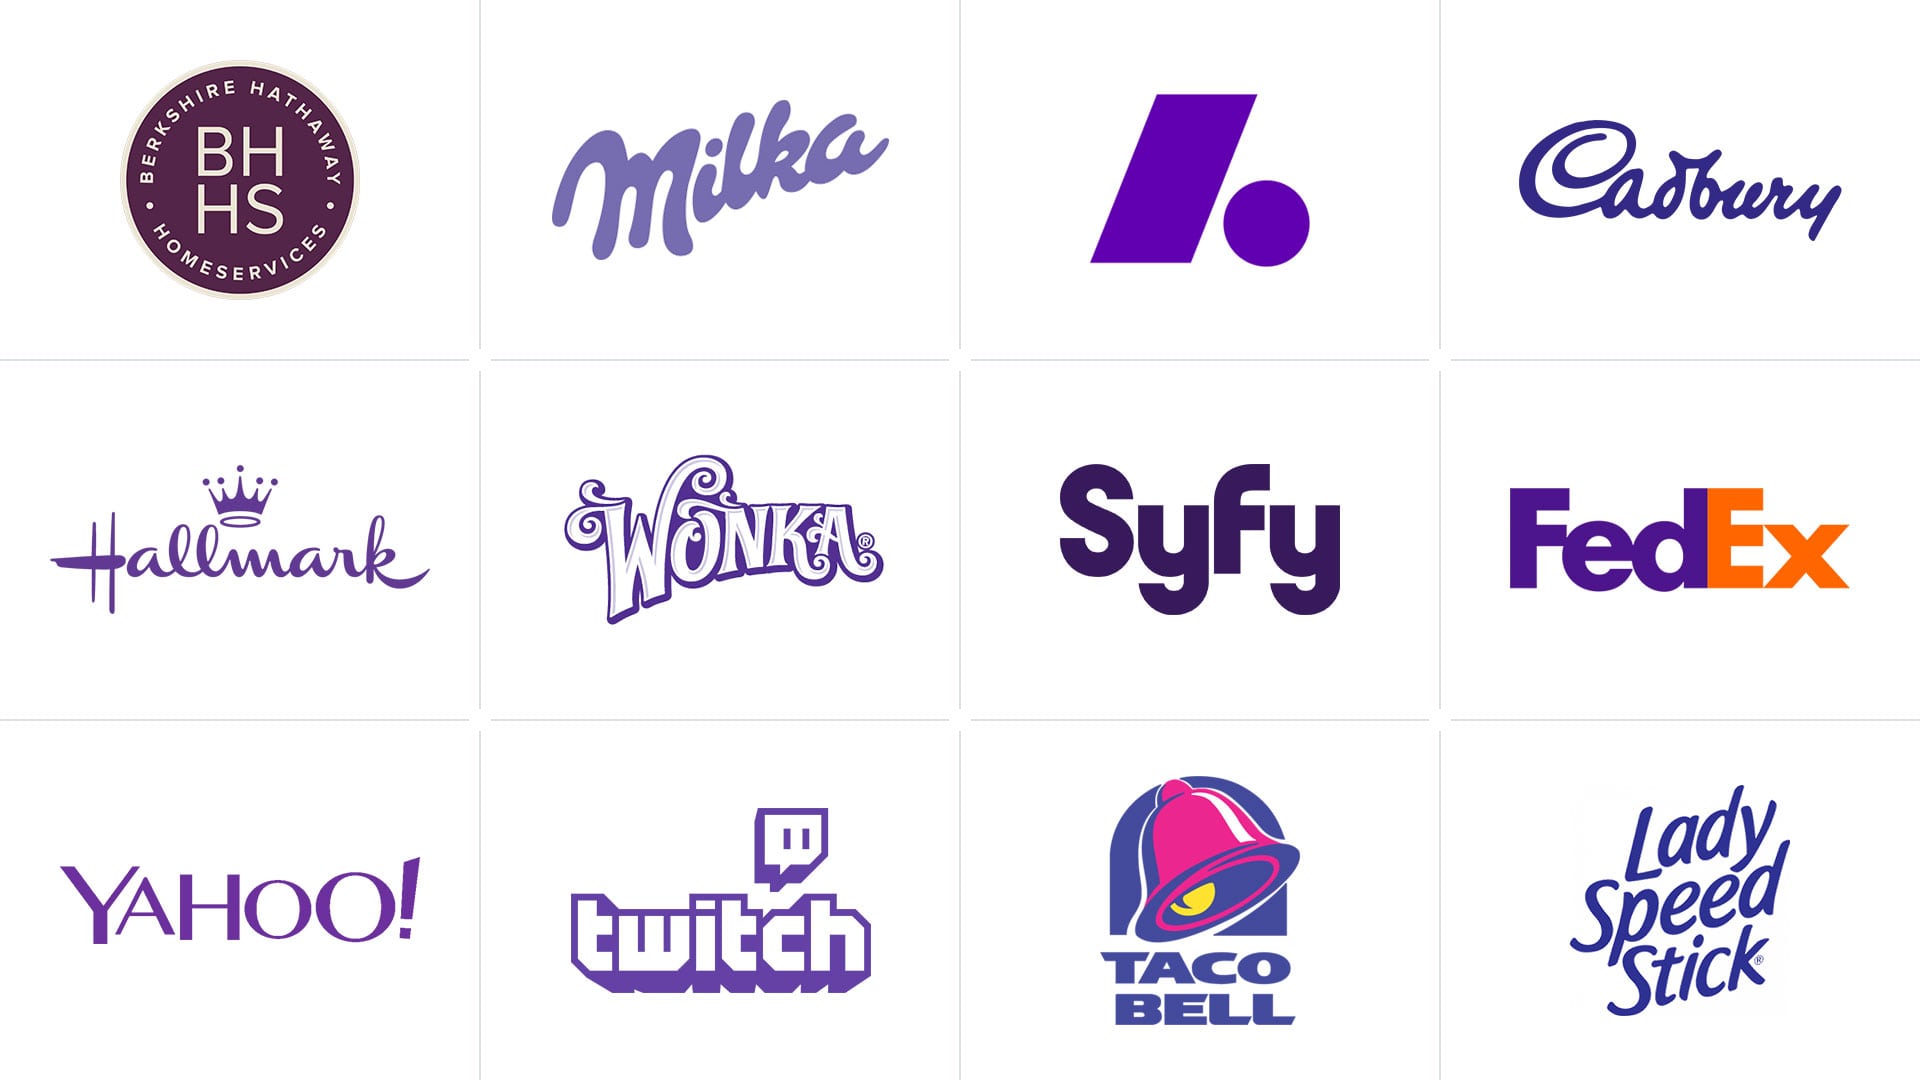 Purple Color Usage Examples in Popular Logos